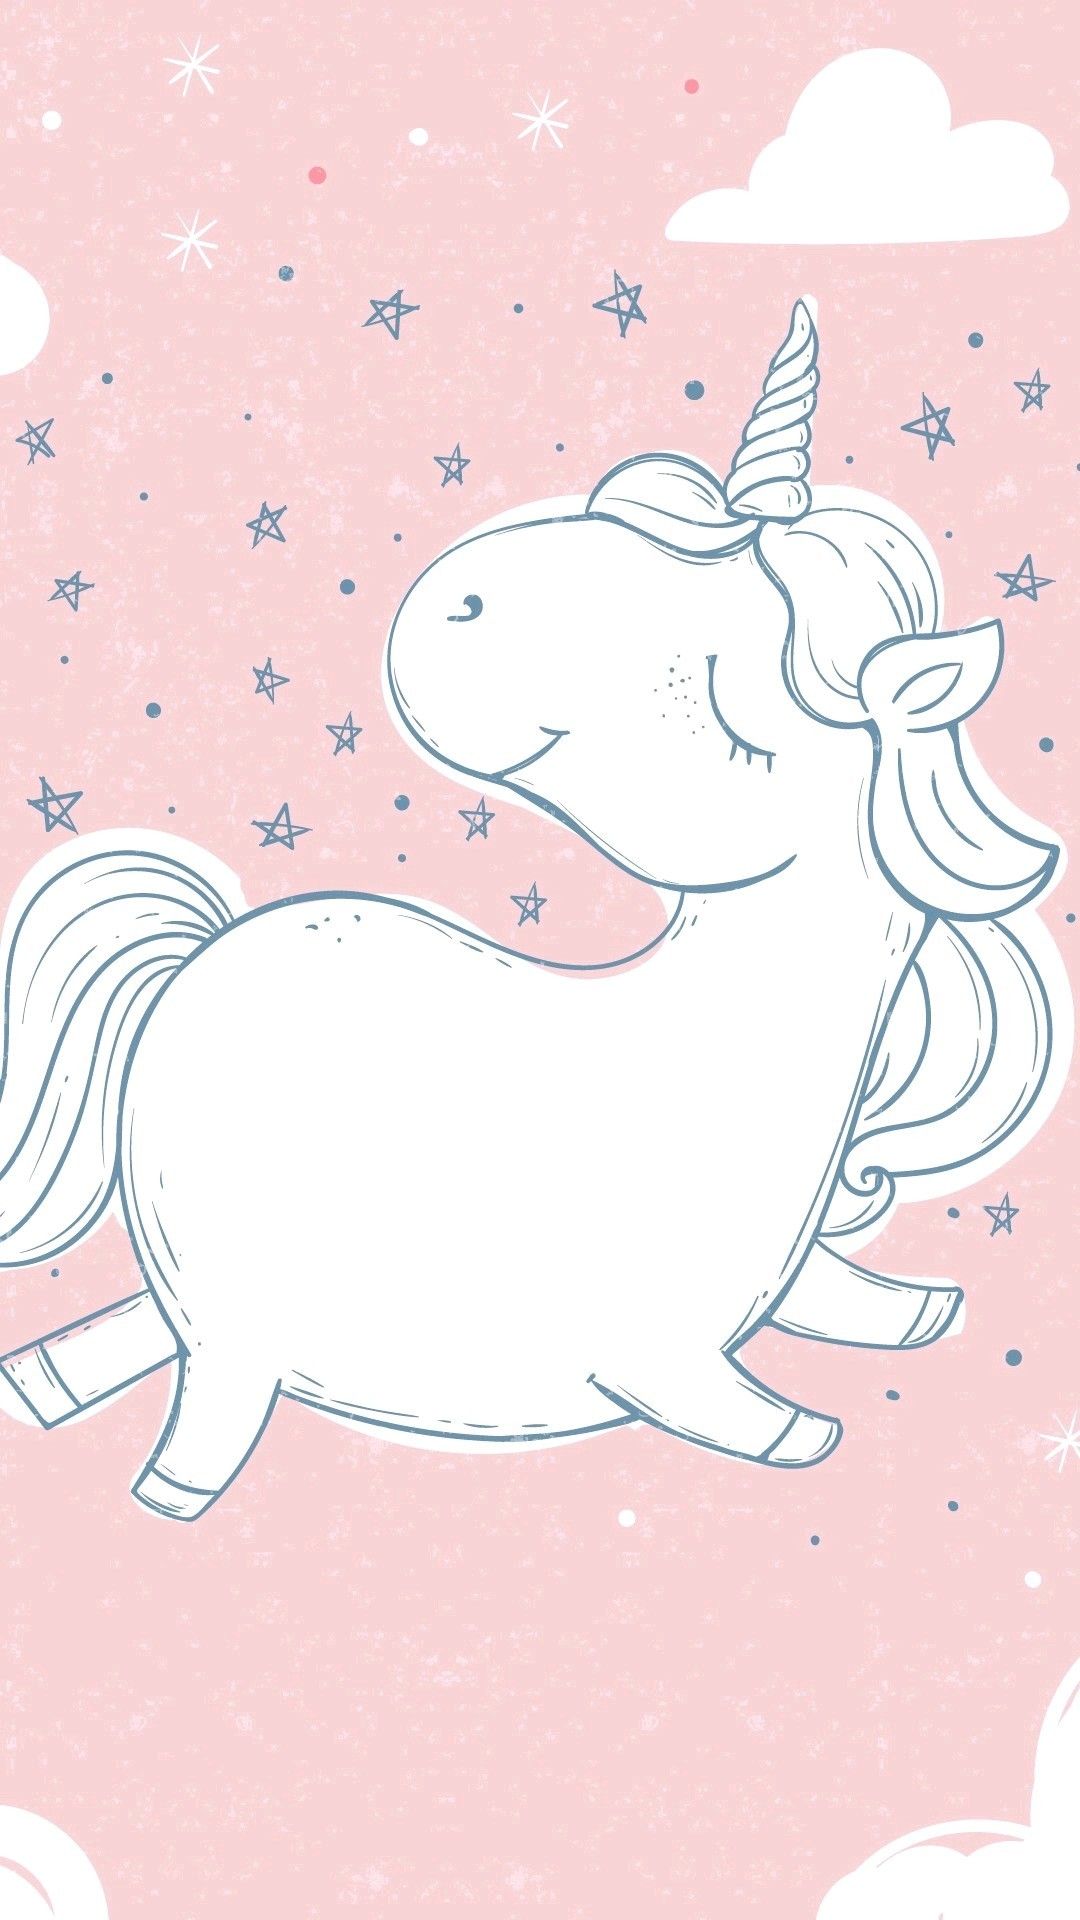 A cute unicorn is flying in the sky - Unicorn